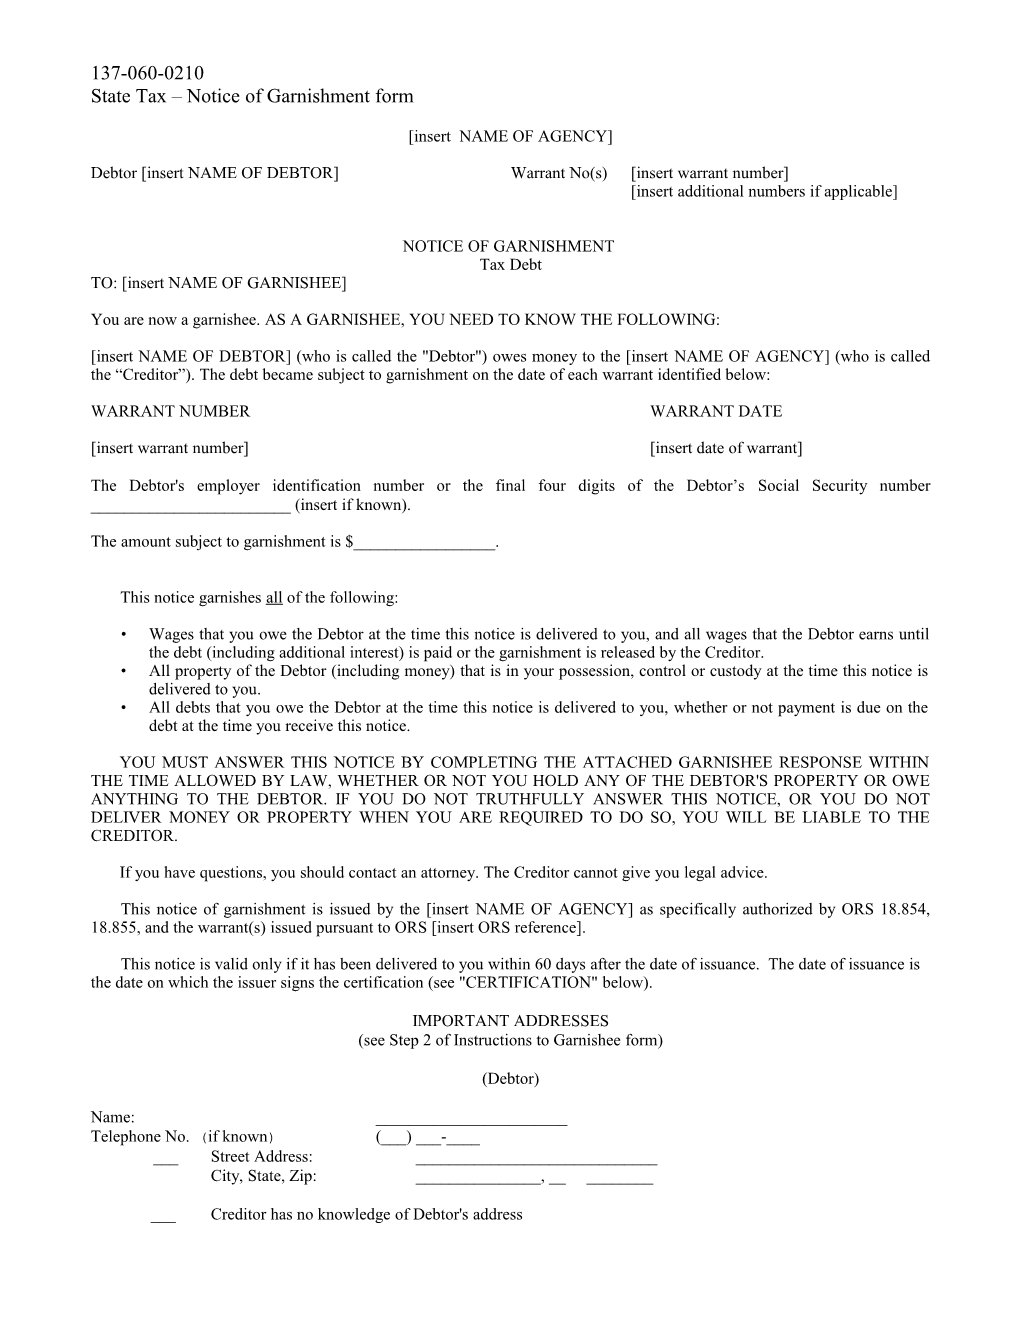 2008 Garnishment Rules/OAR 137-060-0210 Cc (Notice of Garnishment Form)